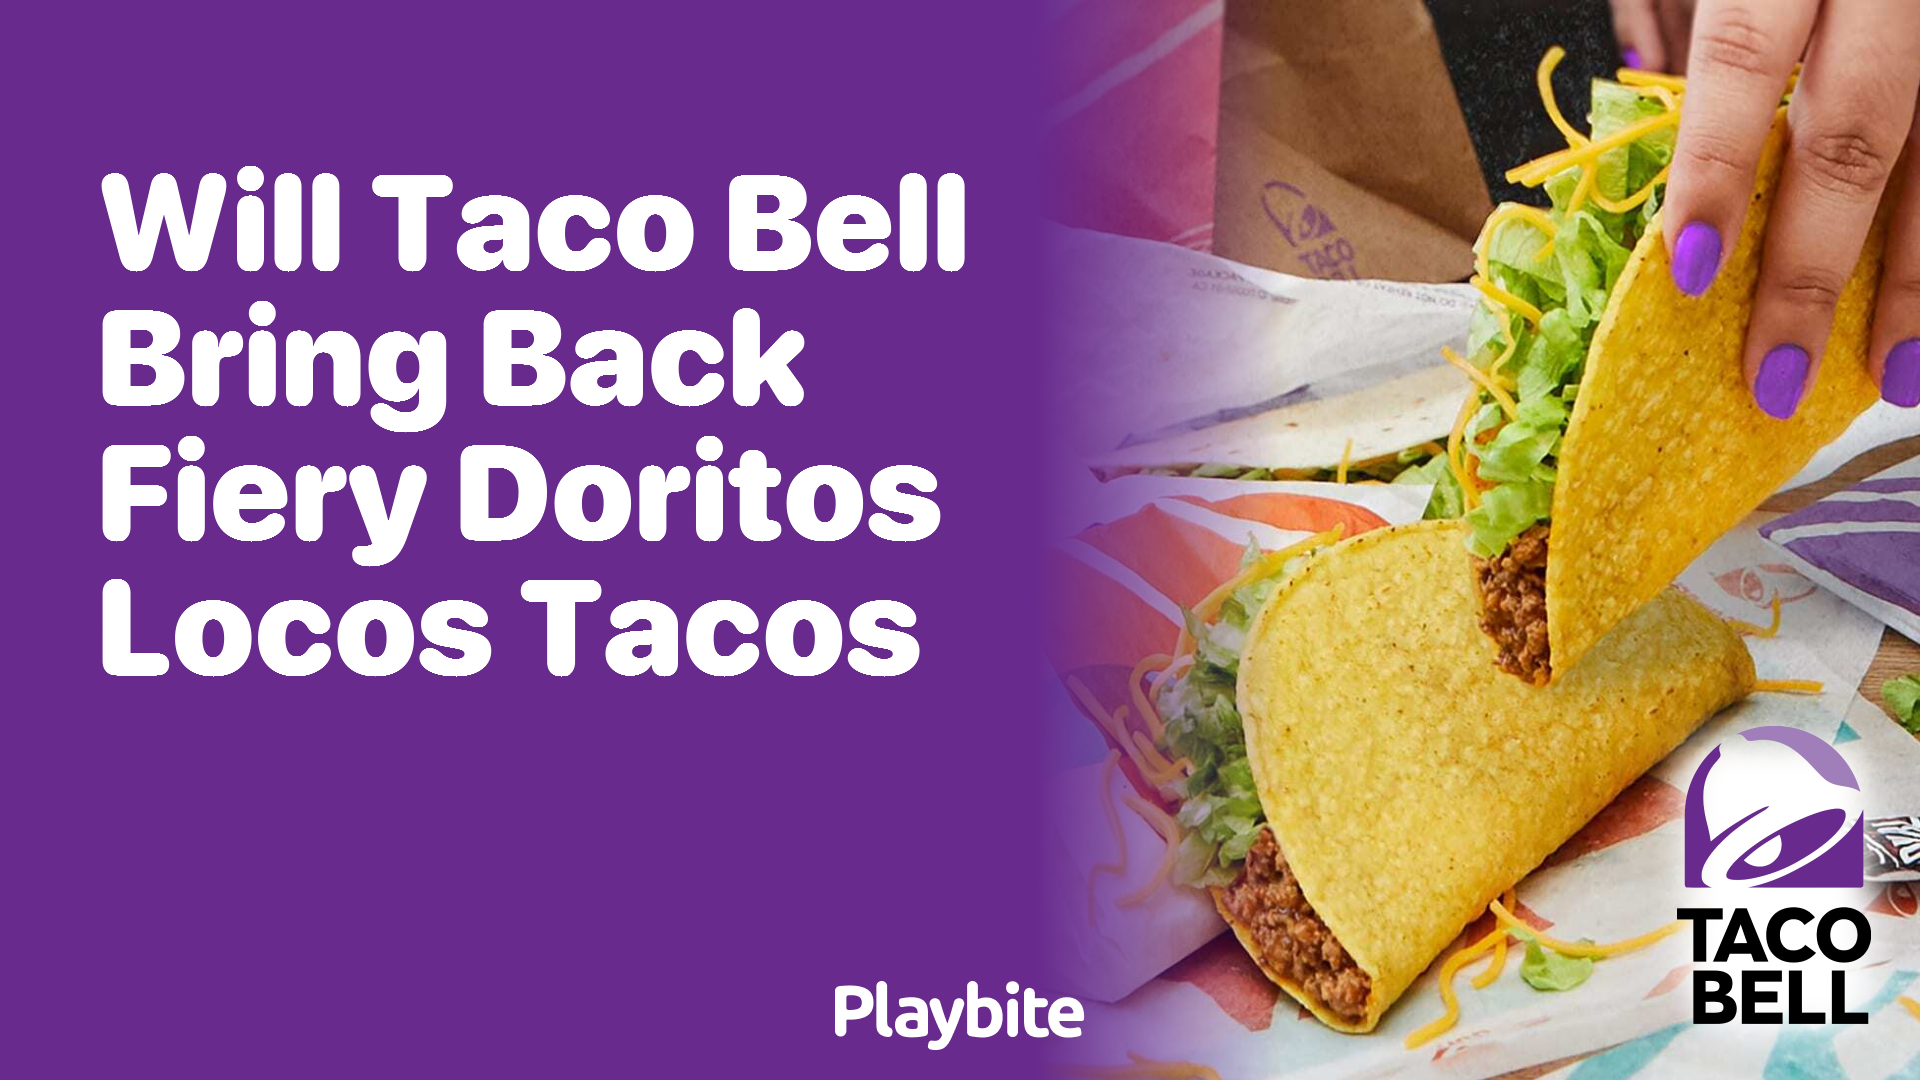 Will Taco Bell Bring Back Fiery Doritos Locos Tacos?